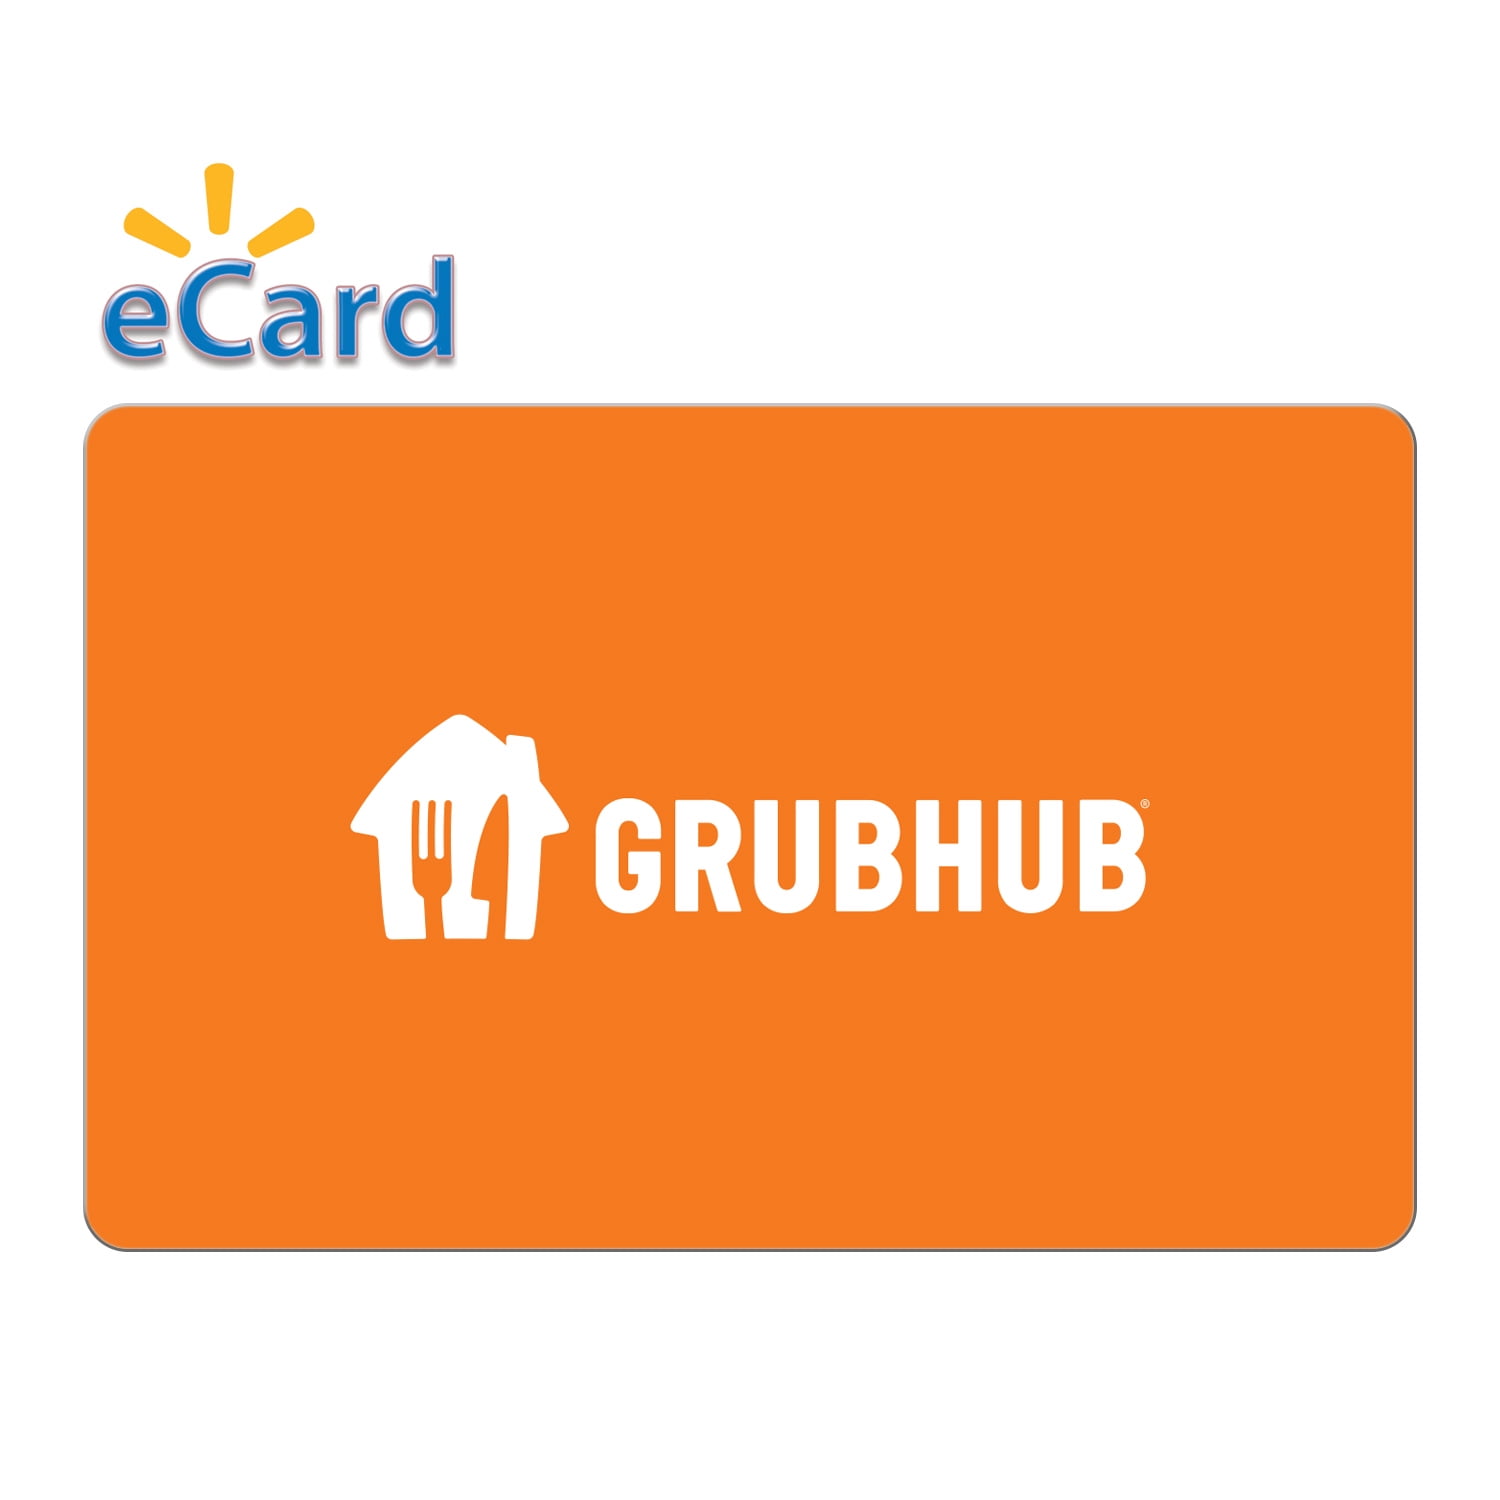 Game & Grub eGift Card